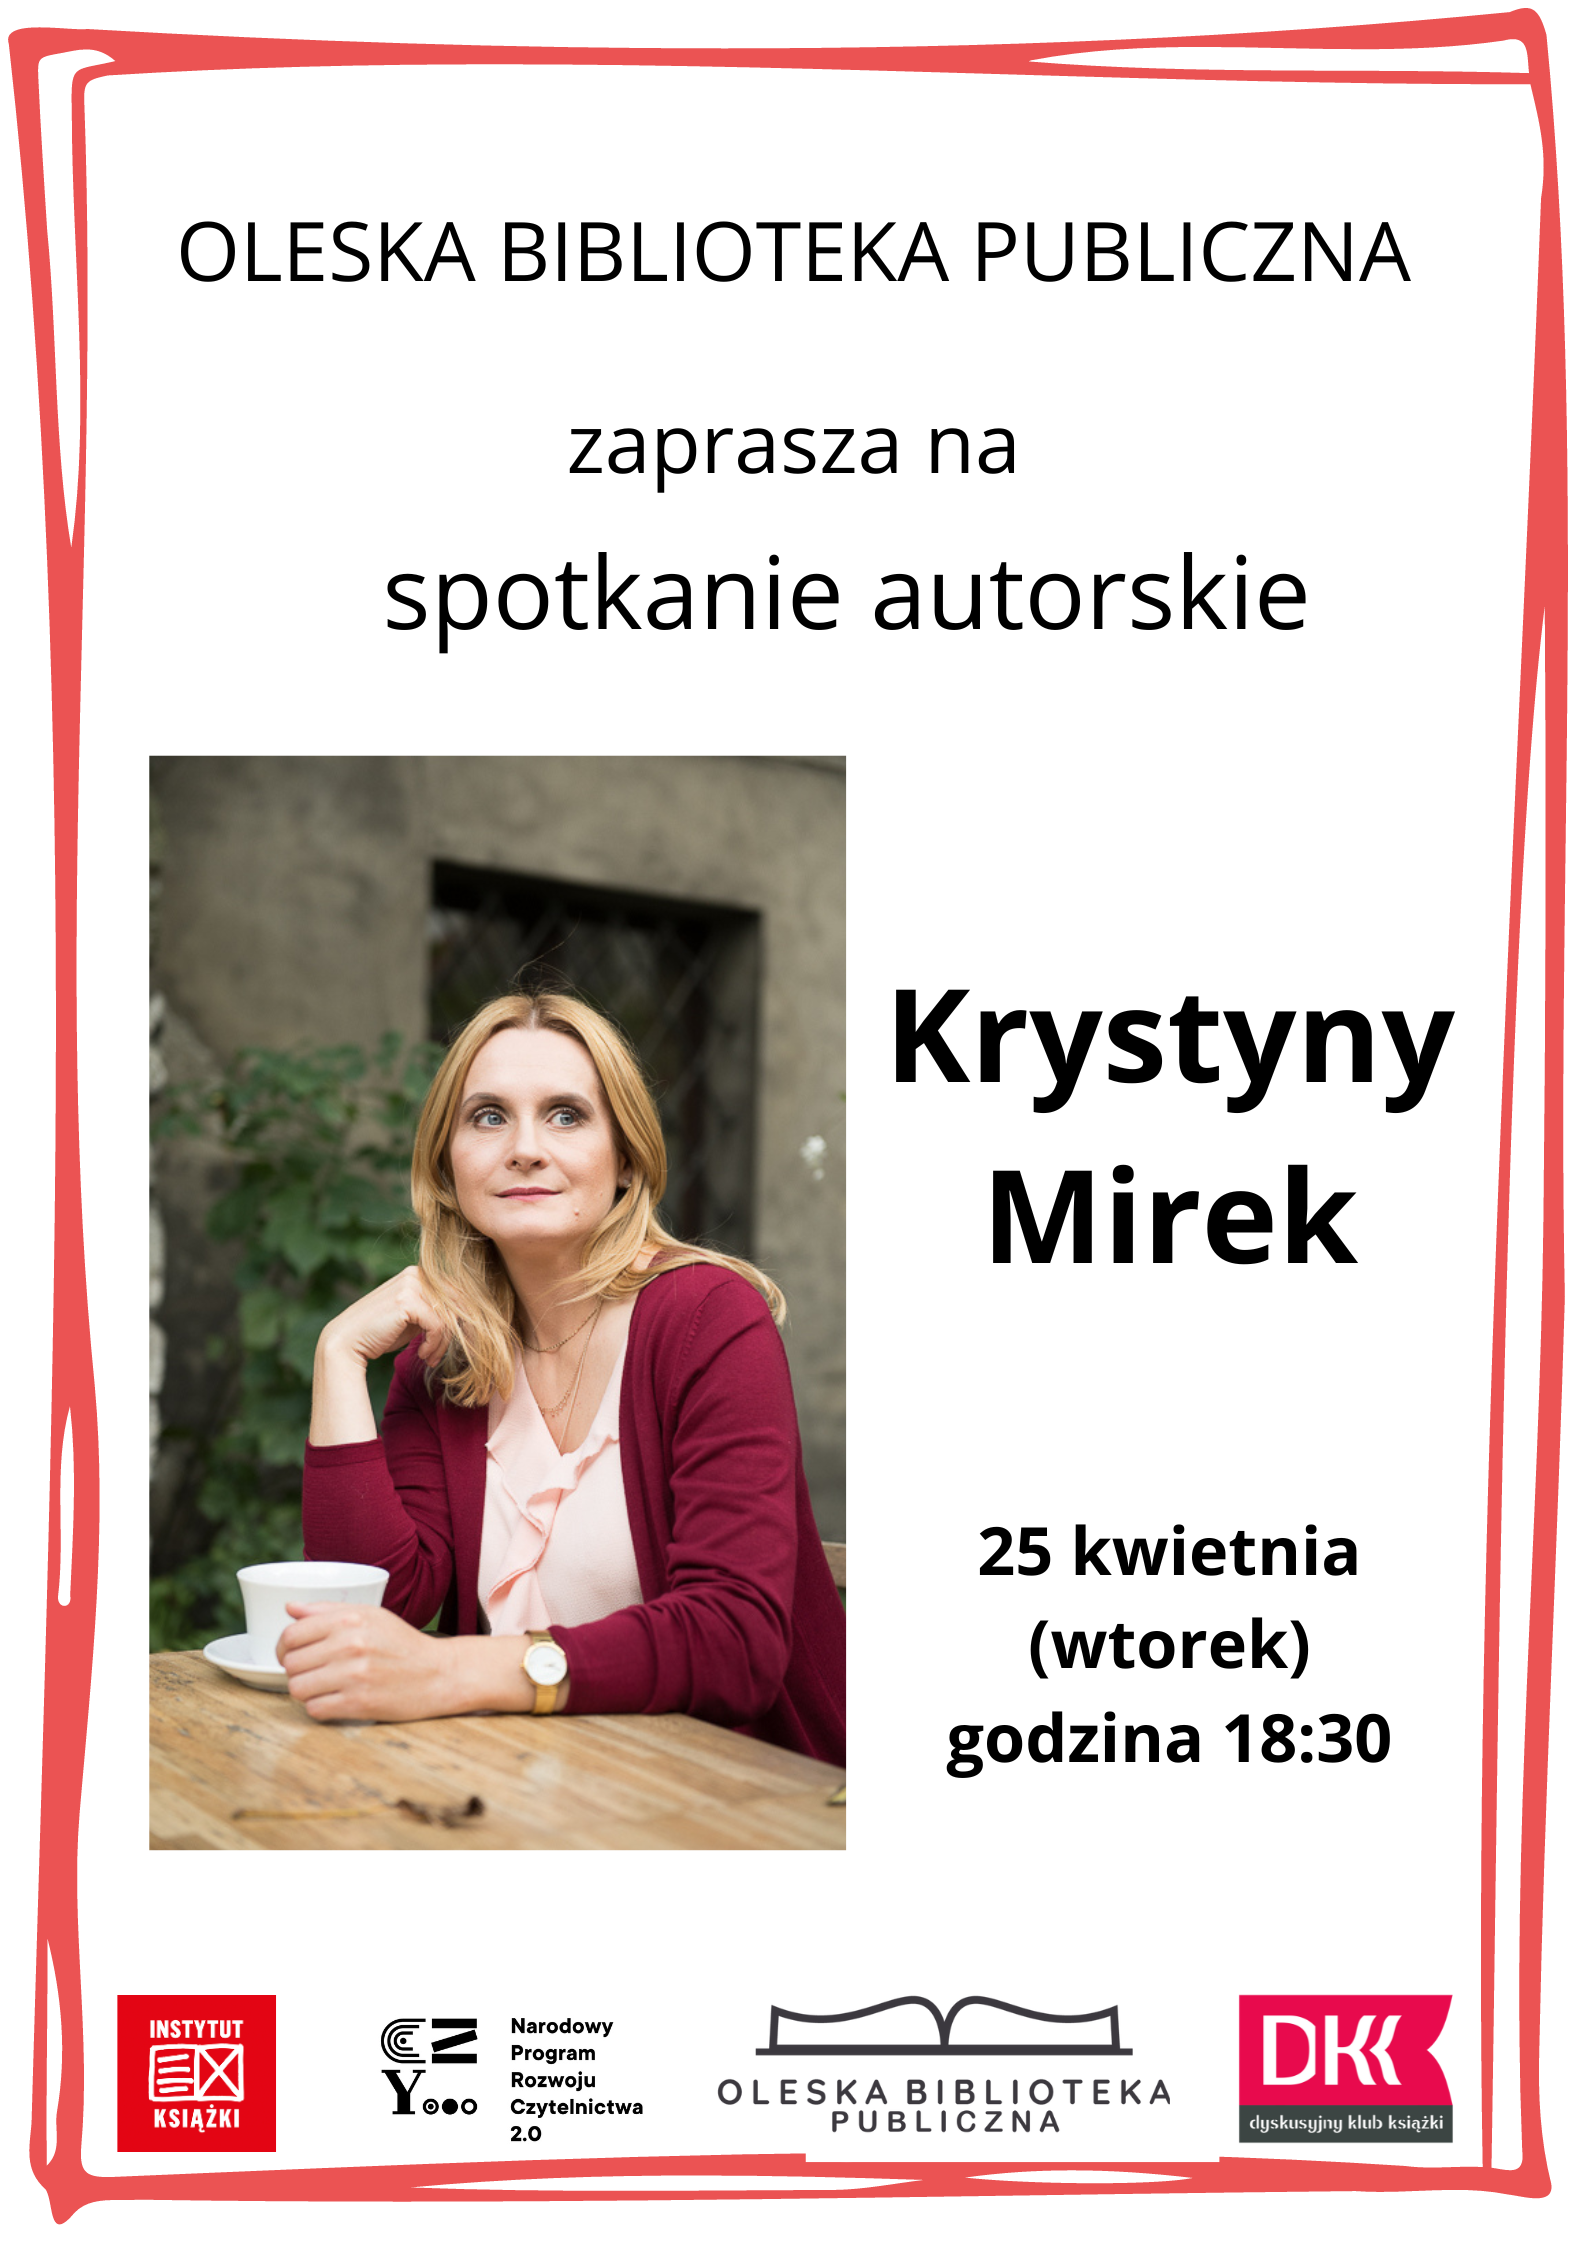 Spotkanie autorskie Krystyny Mirek - plakat